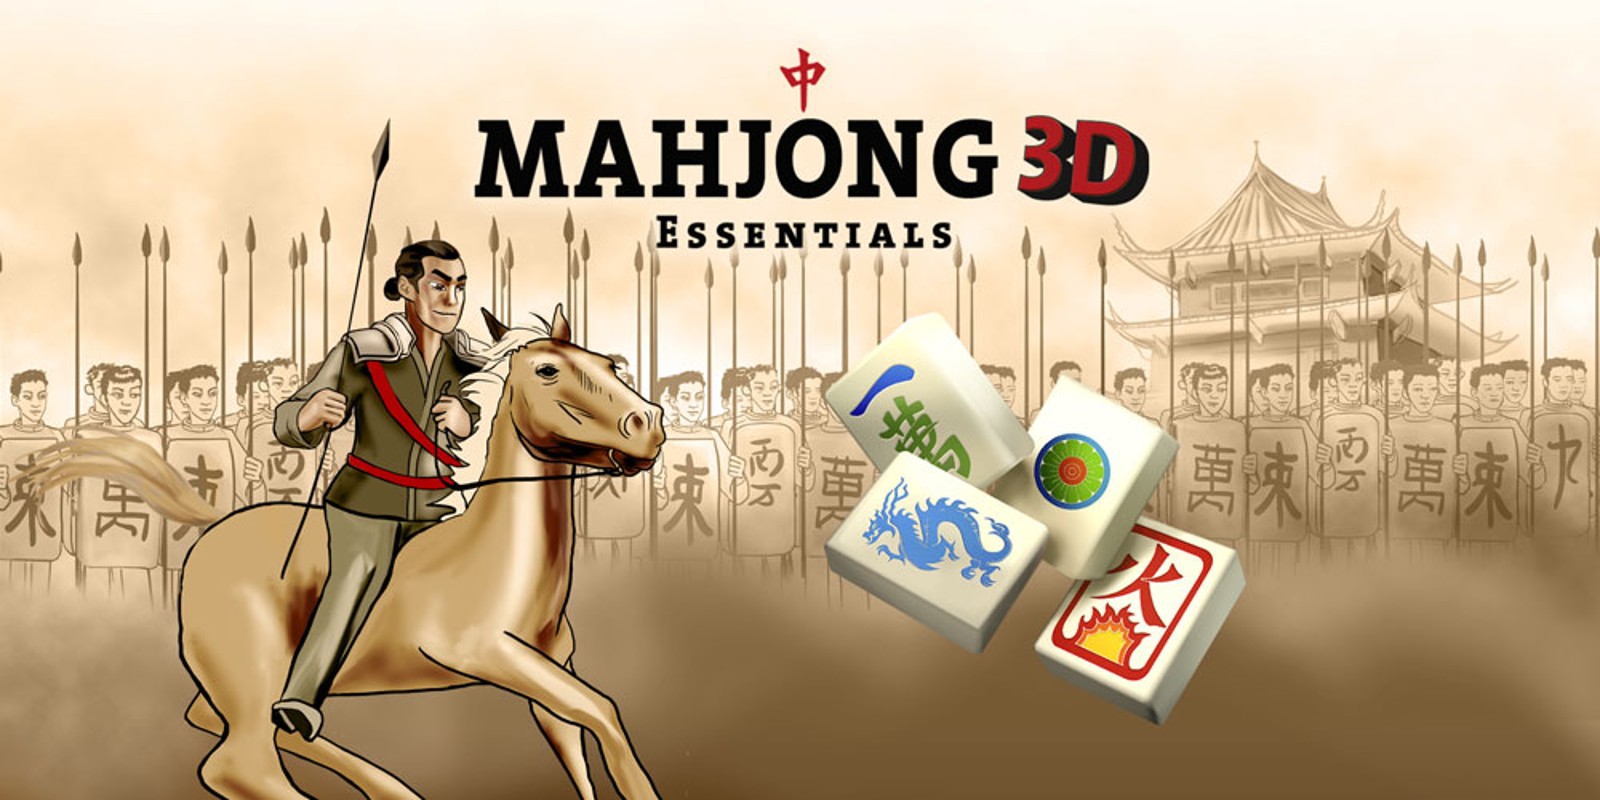 mahjong 3d